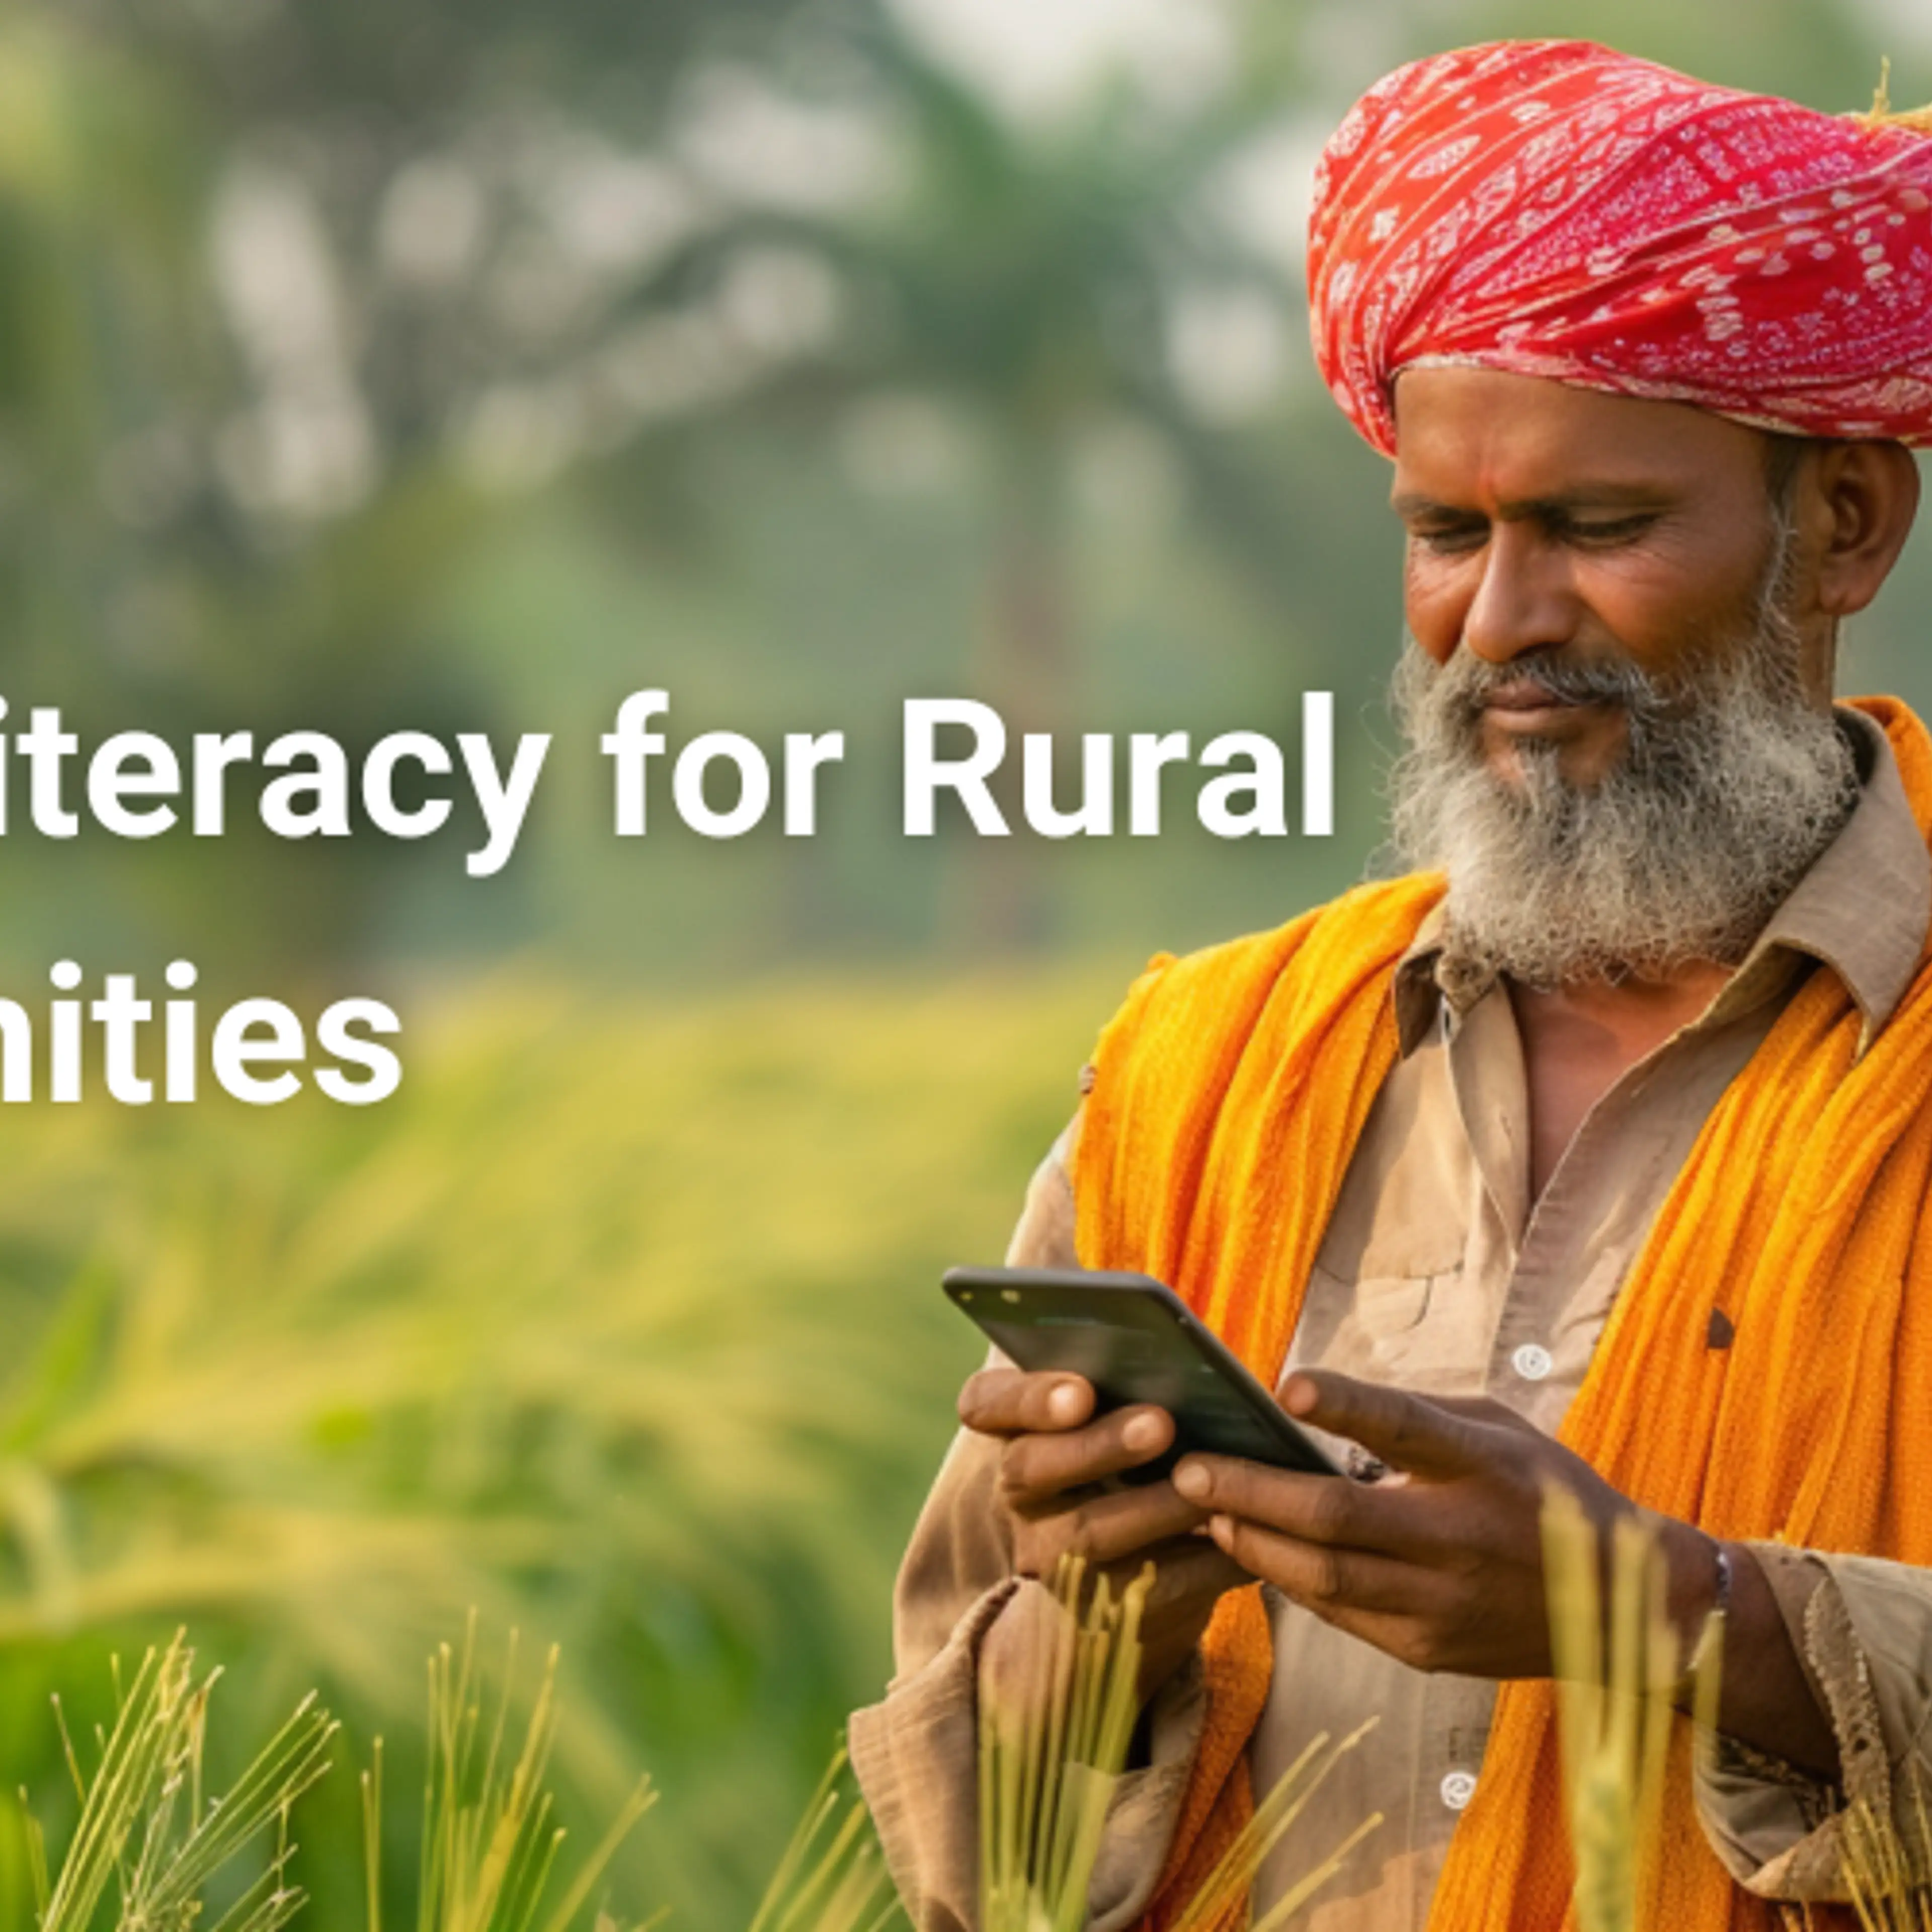 Bridging the Gap: Digital Literacy Initiatives for Rural Communities